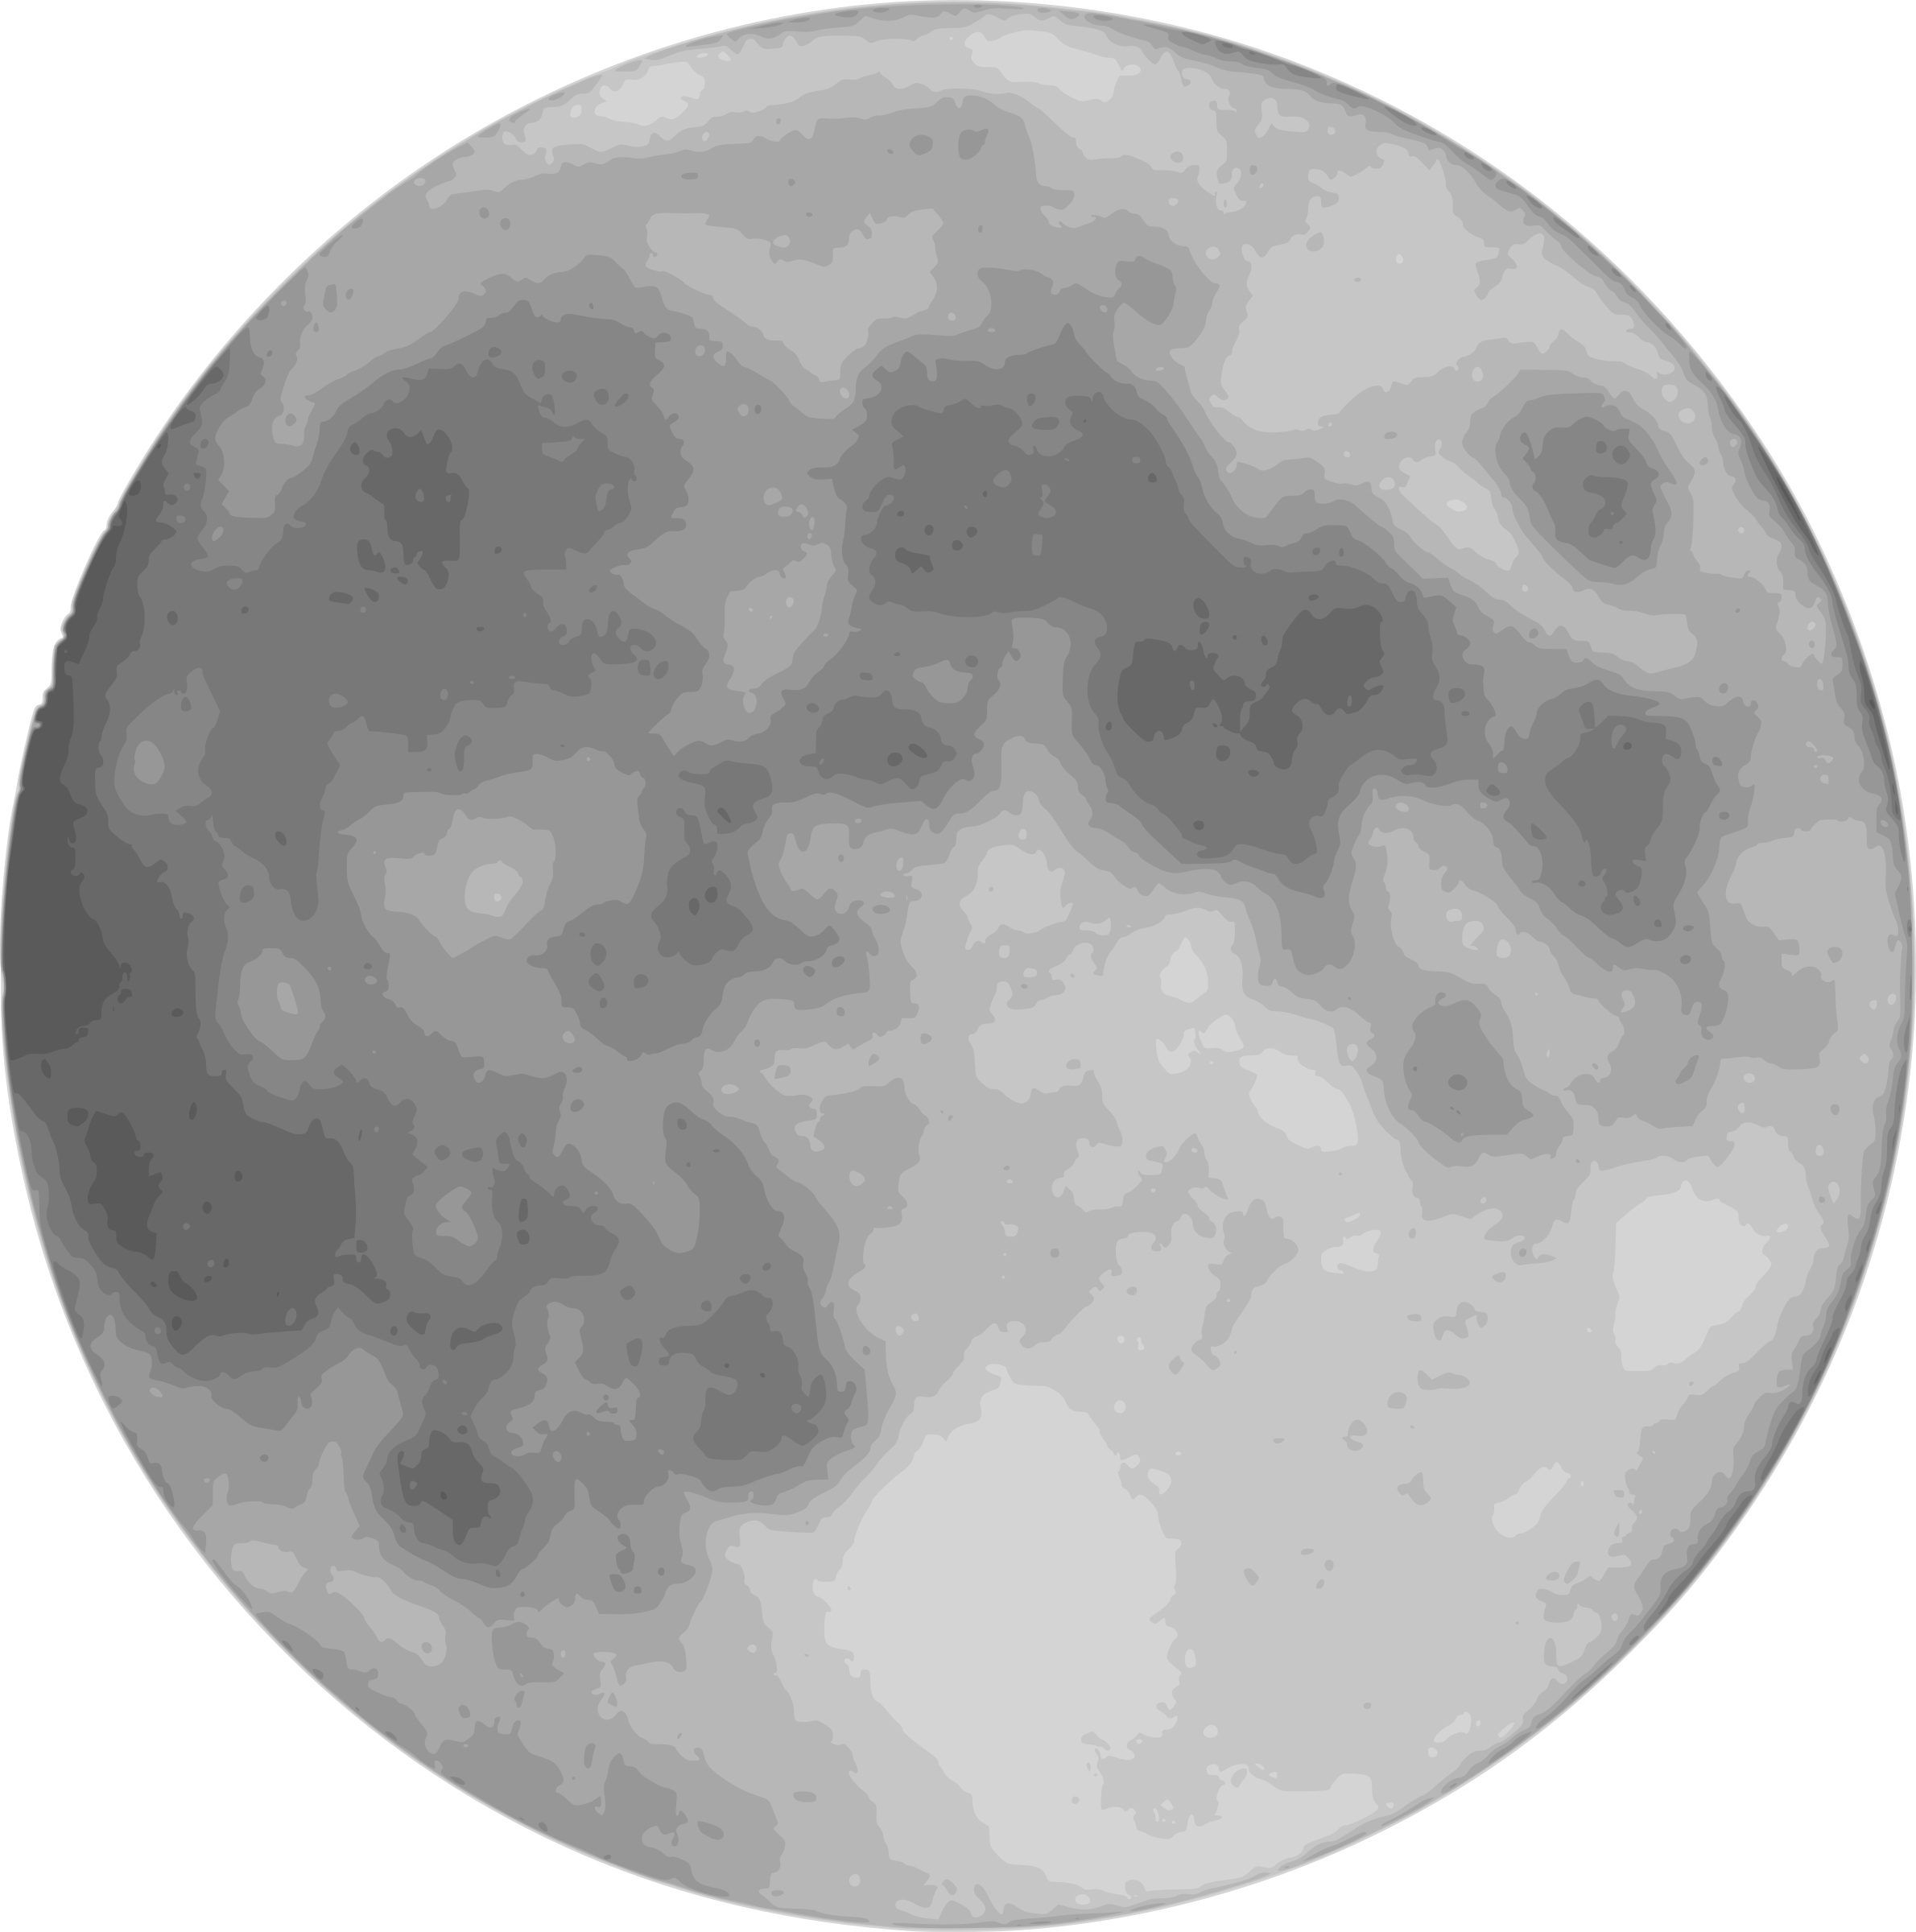 Download PNG image - Moon PNG Transparent Image 